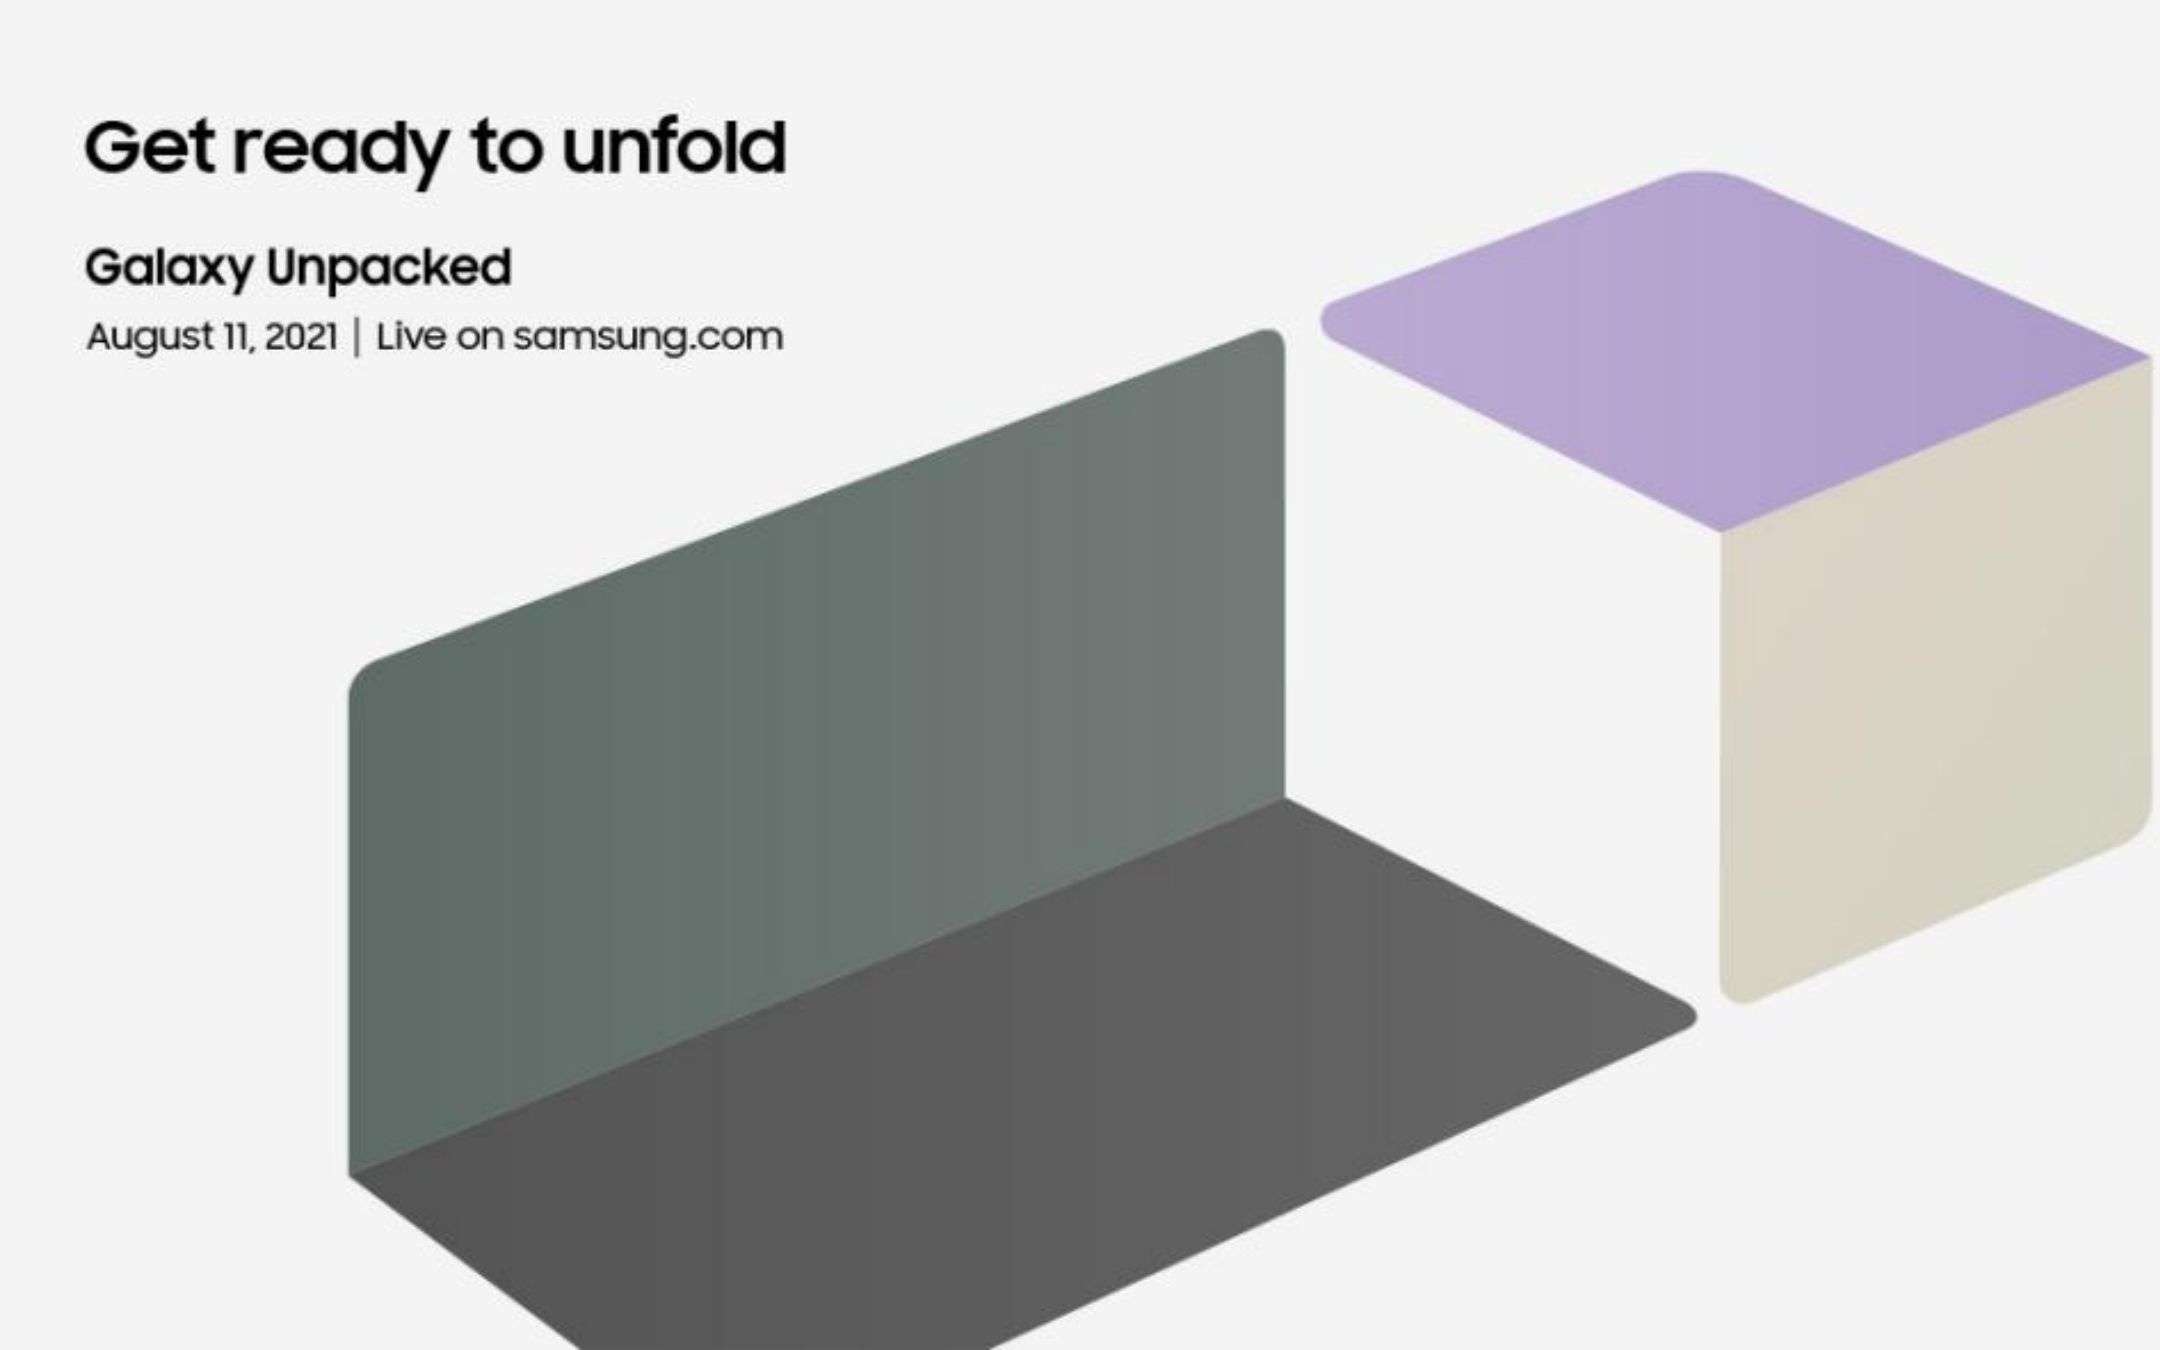 Samsung Galaxy Unpacked si terrà l'11 agosto, UFFICIALE